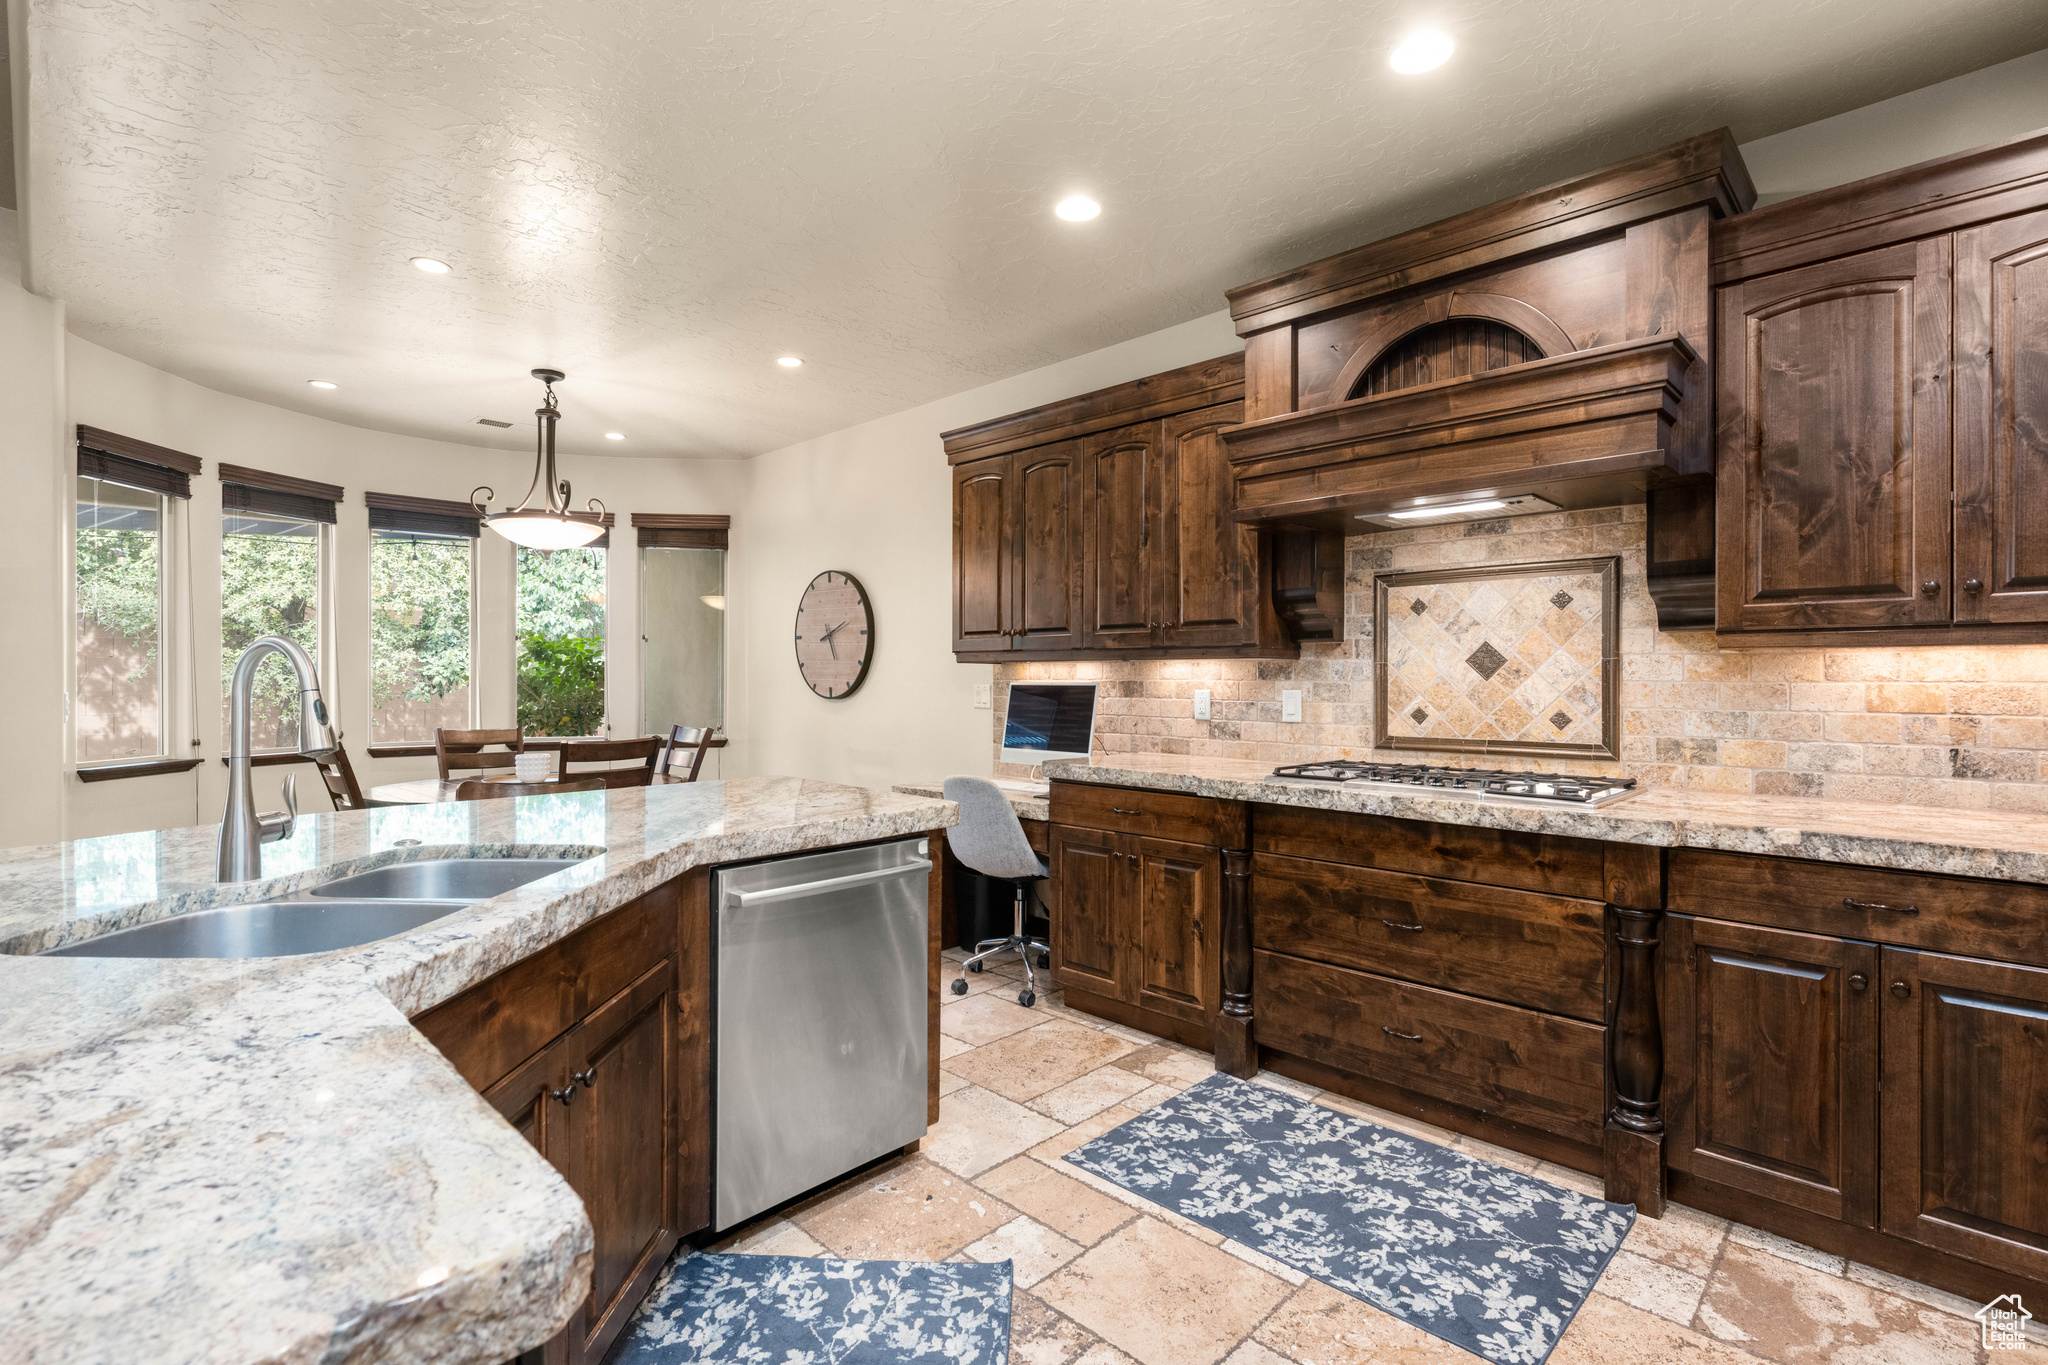 Kitchen with sink, tasteful backsplash, light tile flooring, stainless steel appliances, and pendant lighting